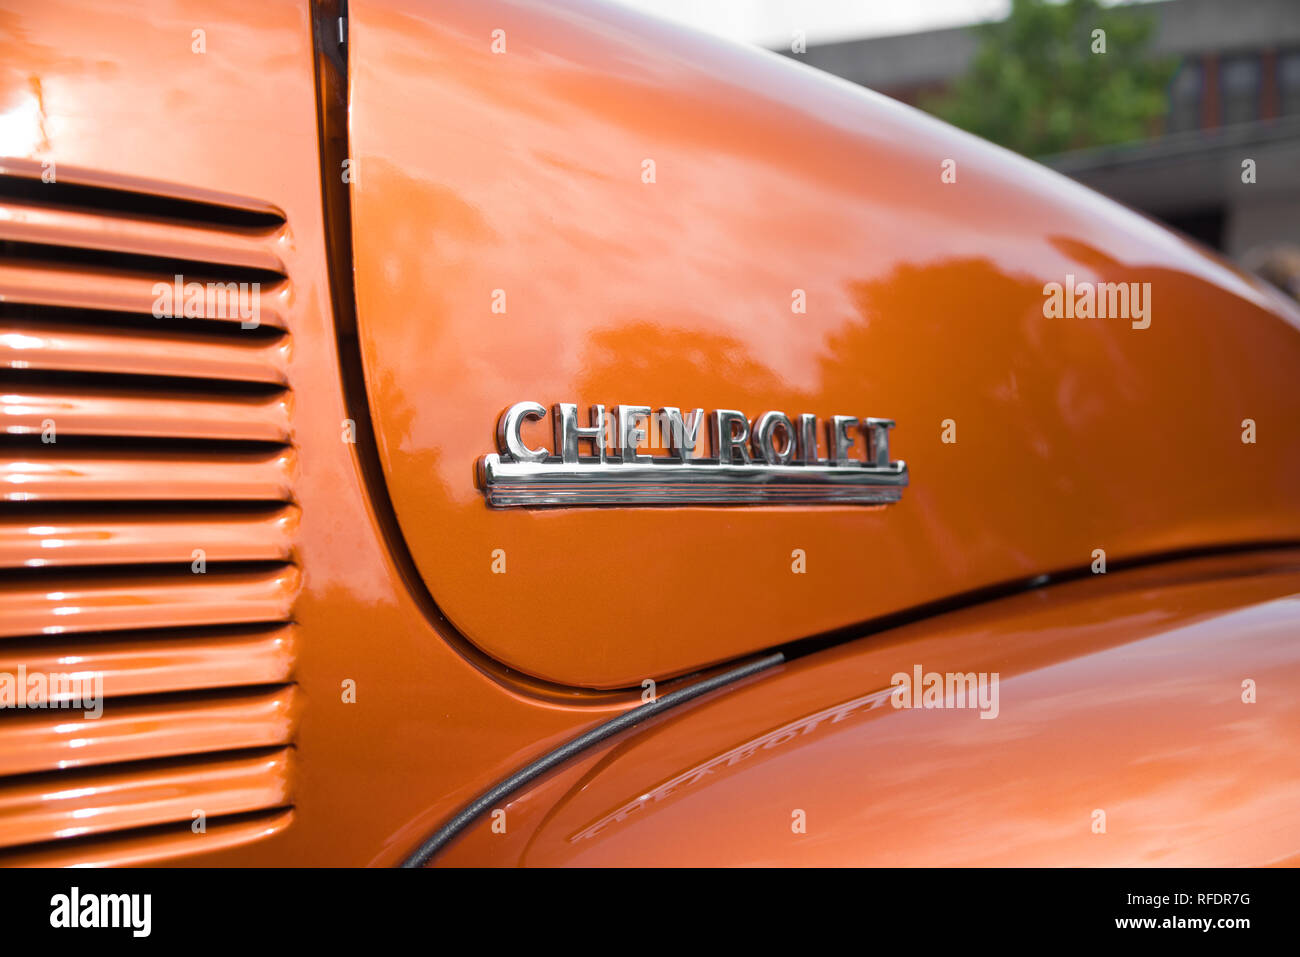 NIJVERDAL, NETHERLANDS - SEPTEMBER 17, 2017: Closeup of a chevrolet logo on an orange brown oldtimer car. Stock Photo